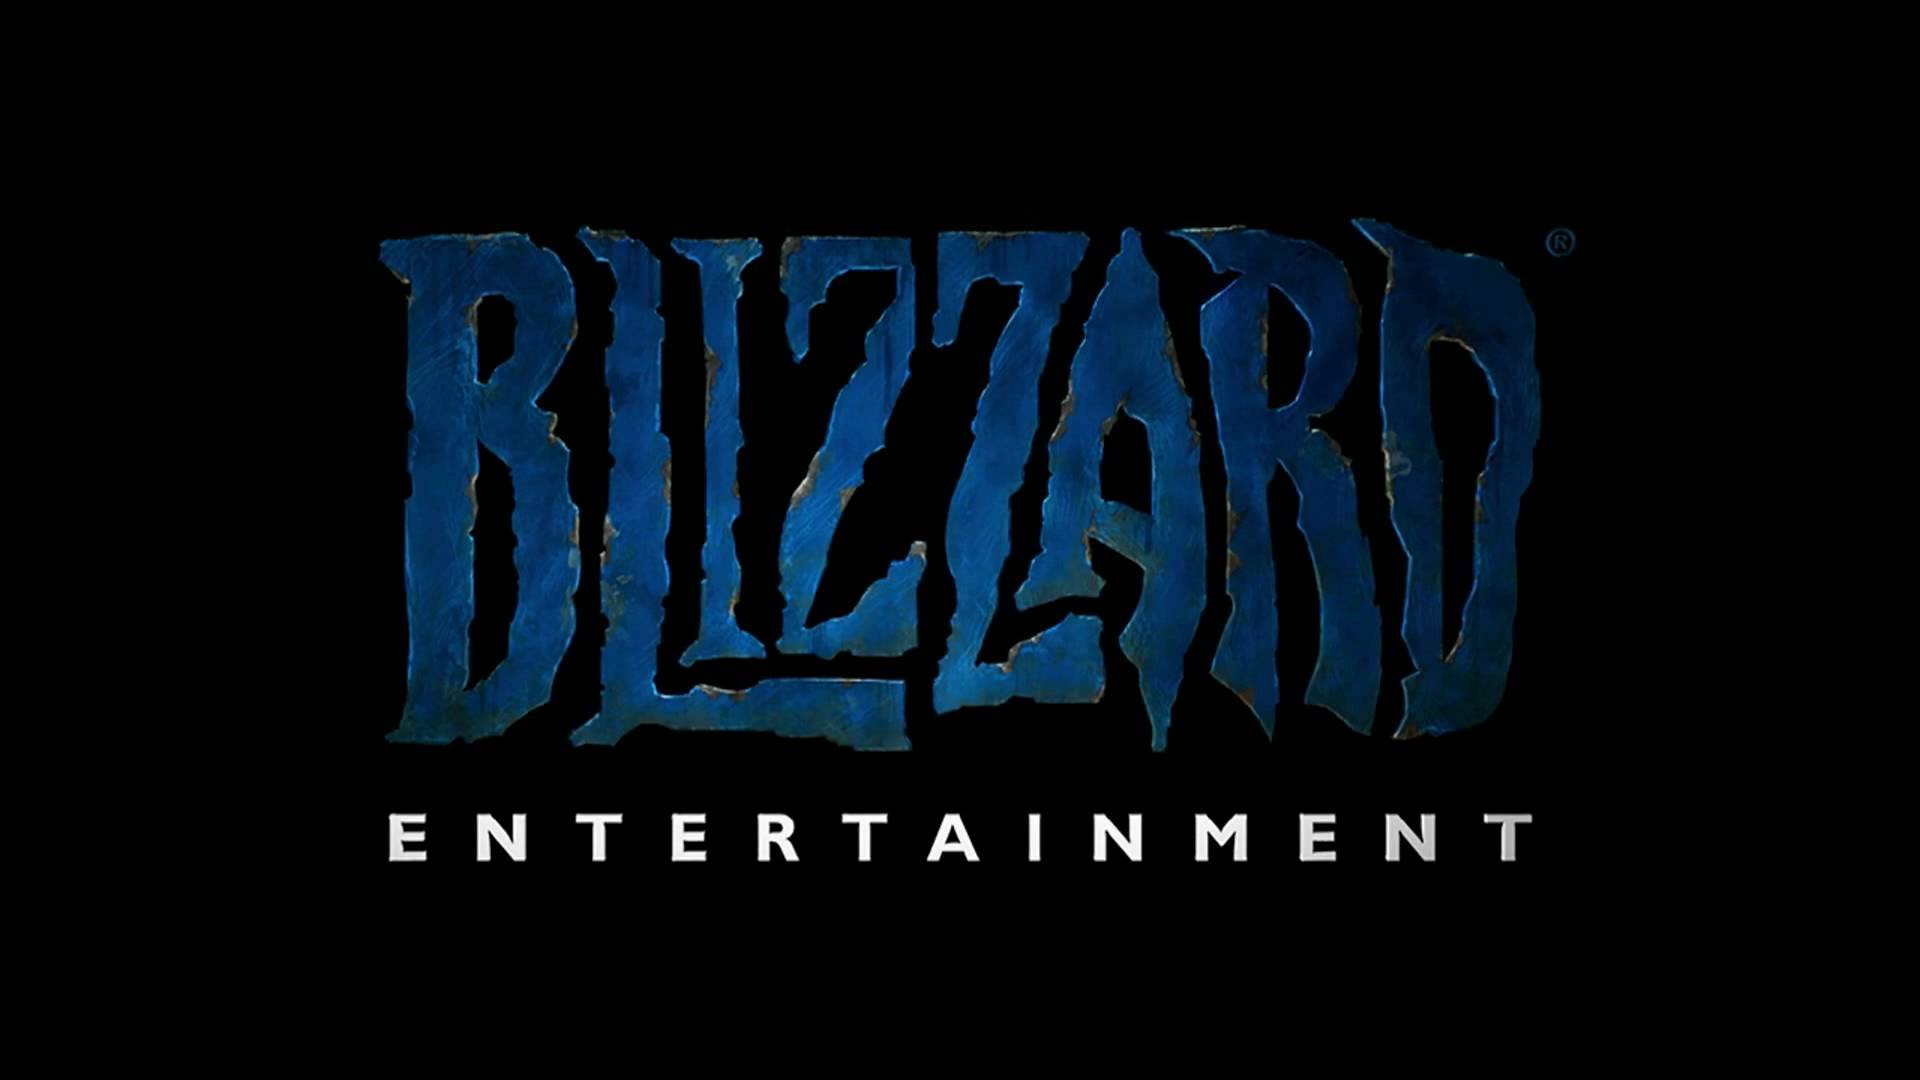 Popular Entertainment Logo - Blizzard entertainment Logos